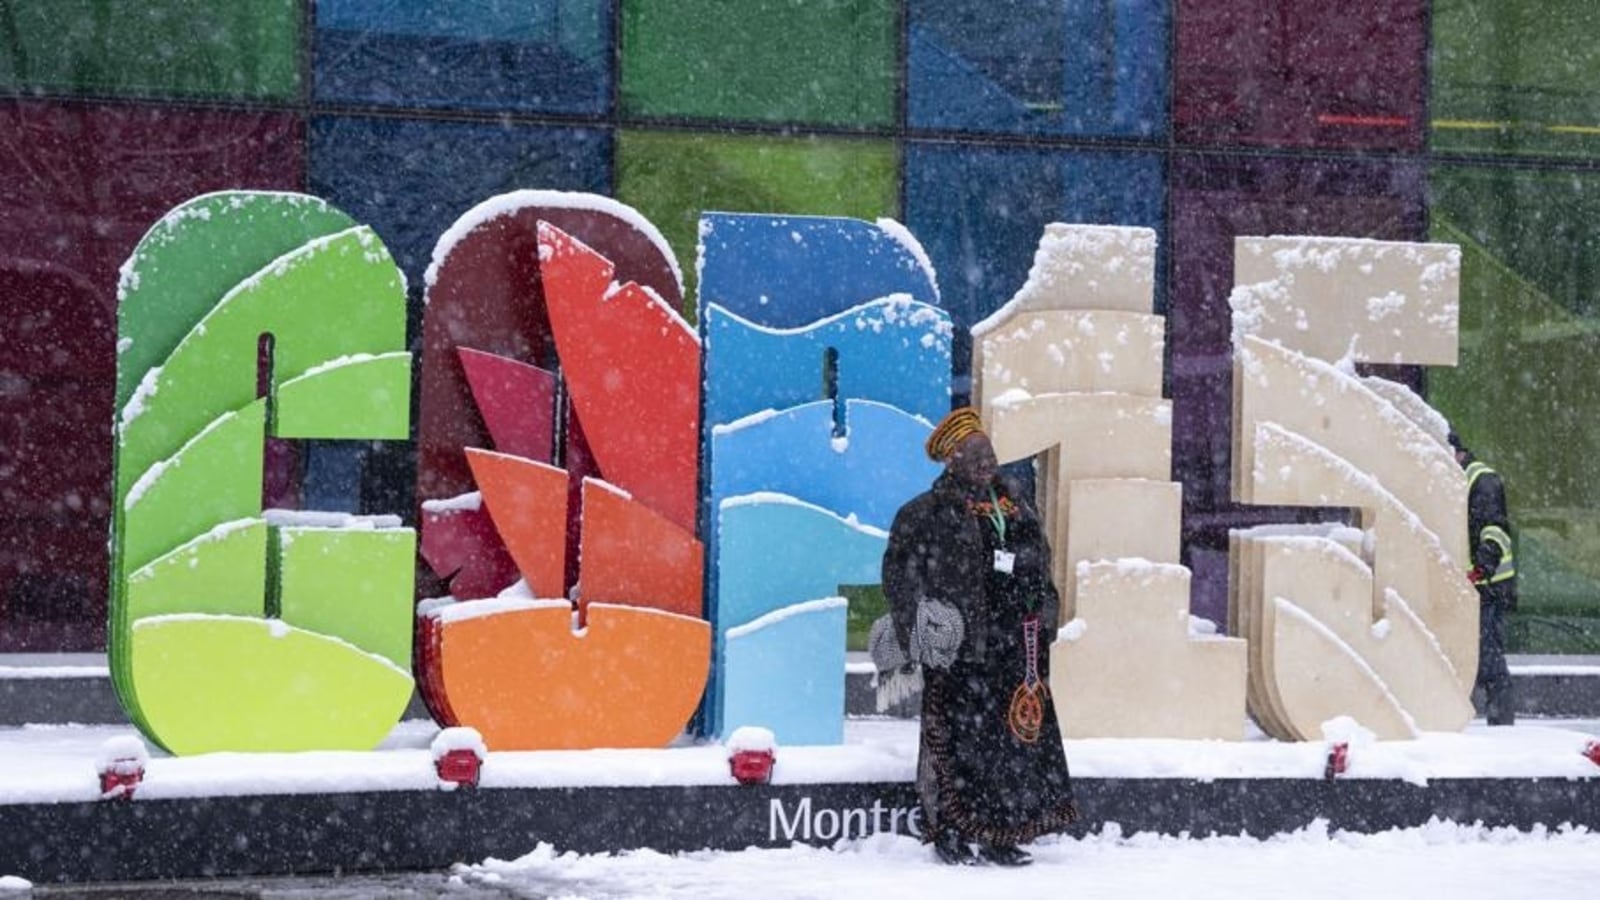 Montreal winter festival 2025 ice sculpture